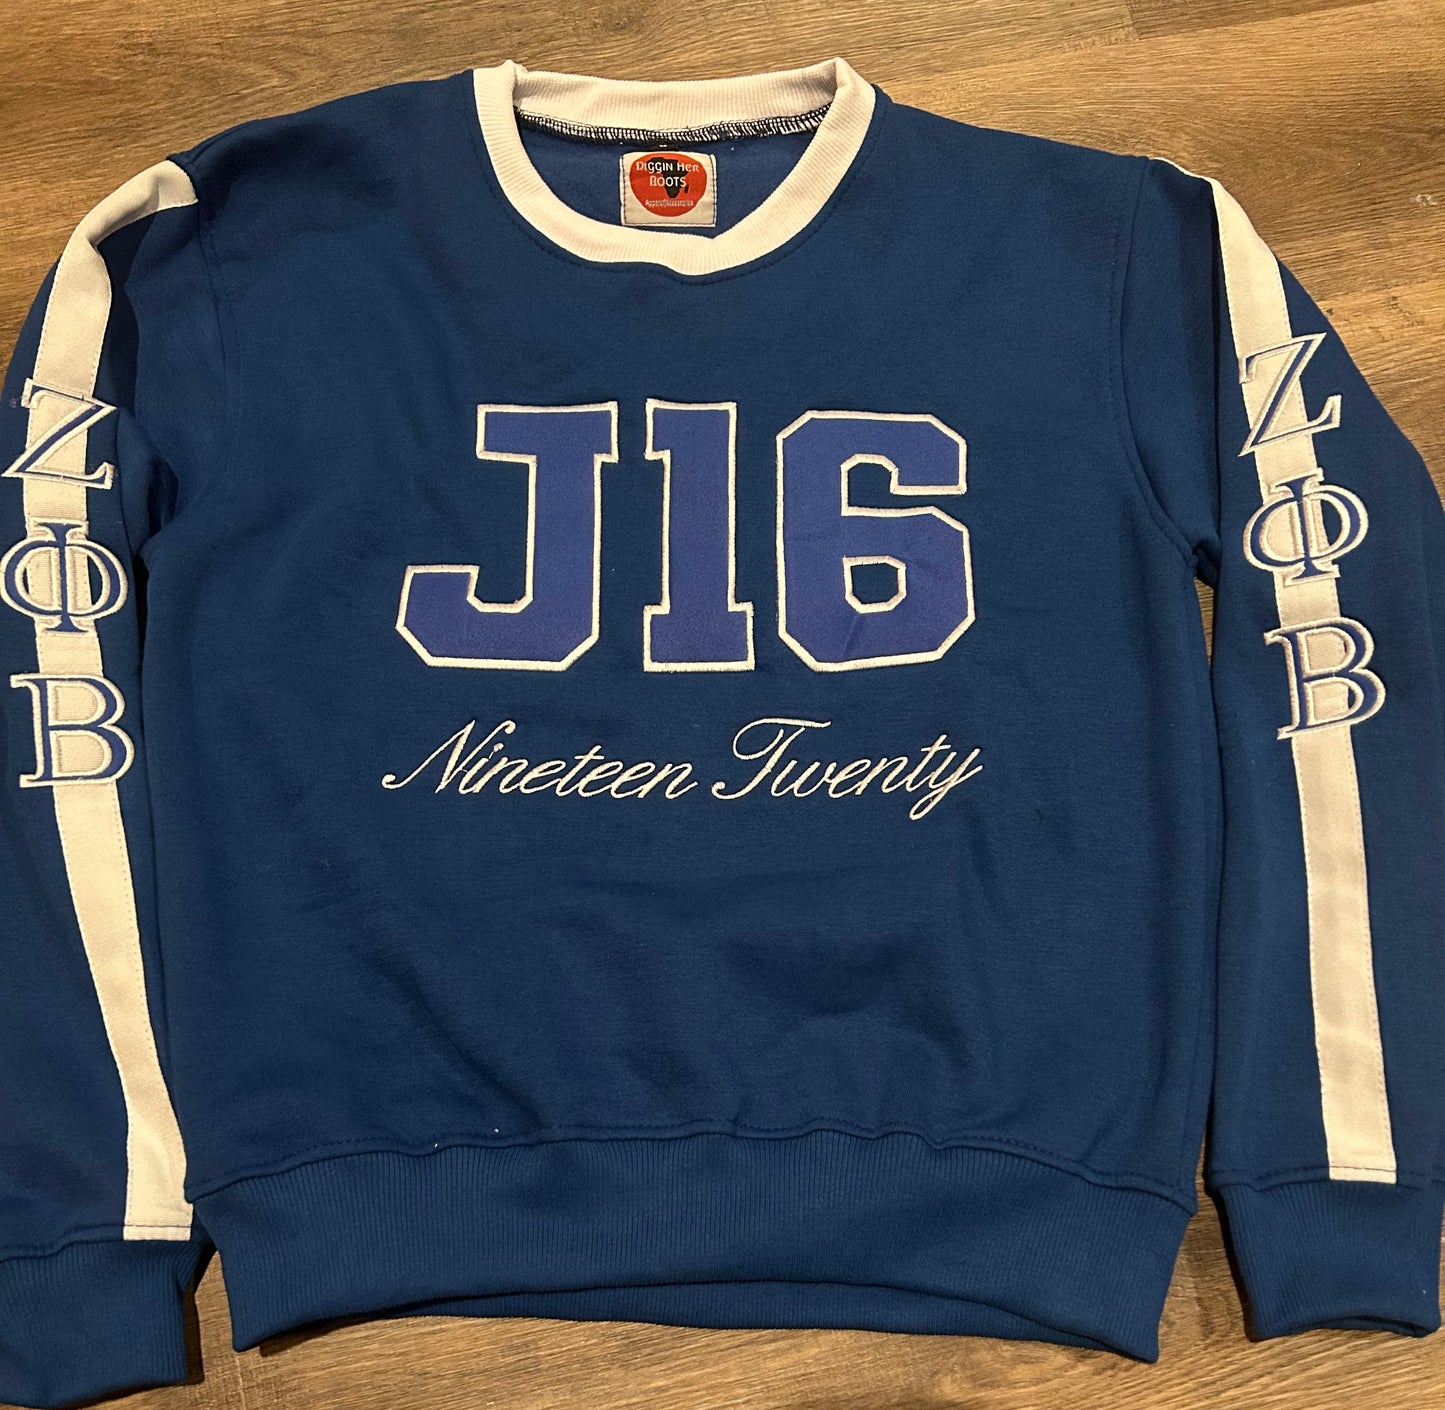 J16 celebration sweatshirt